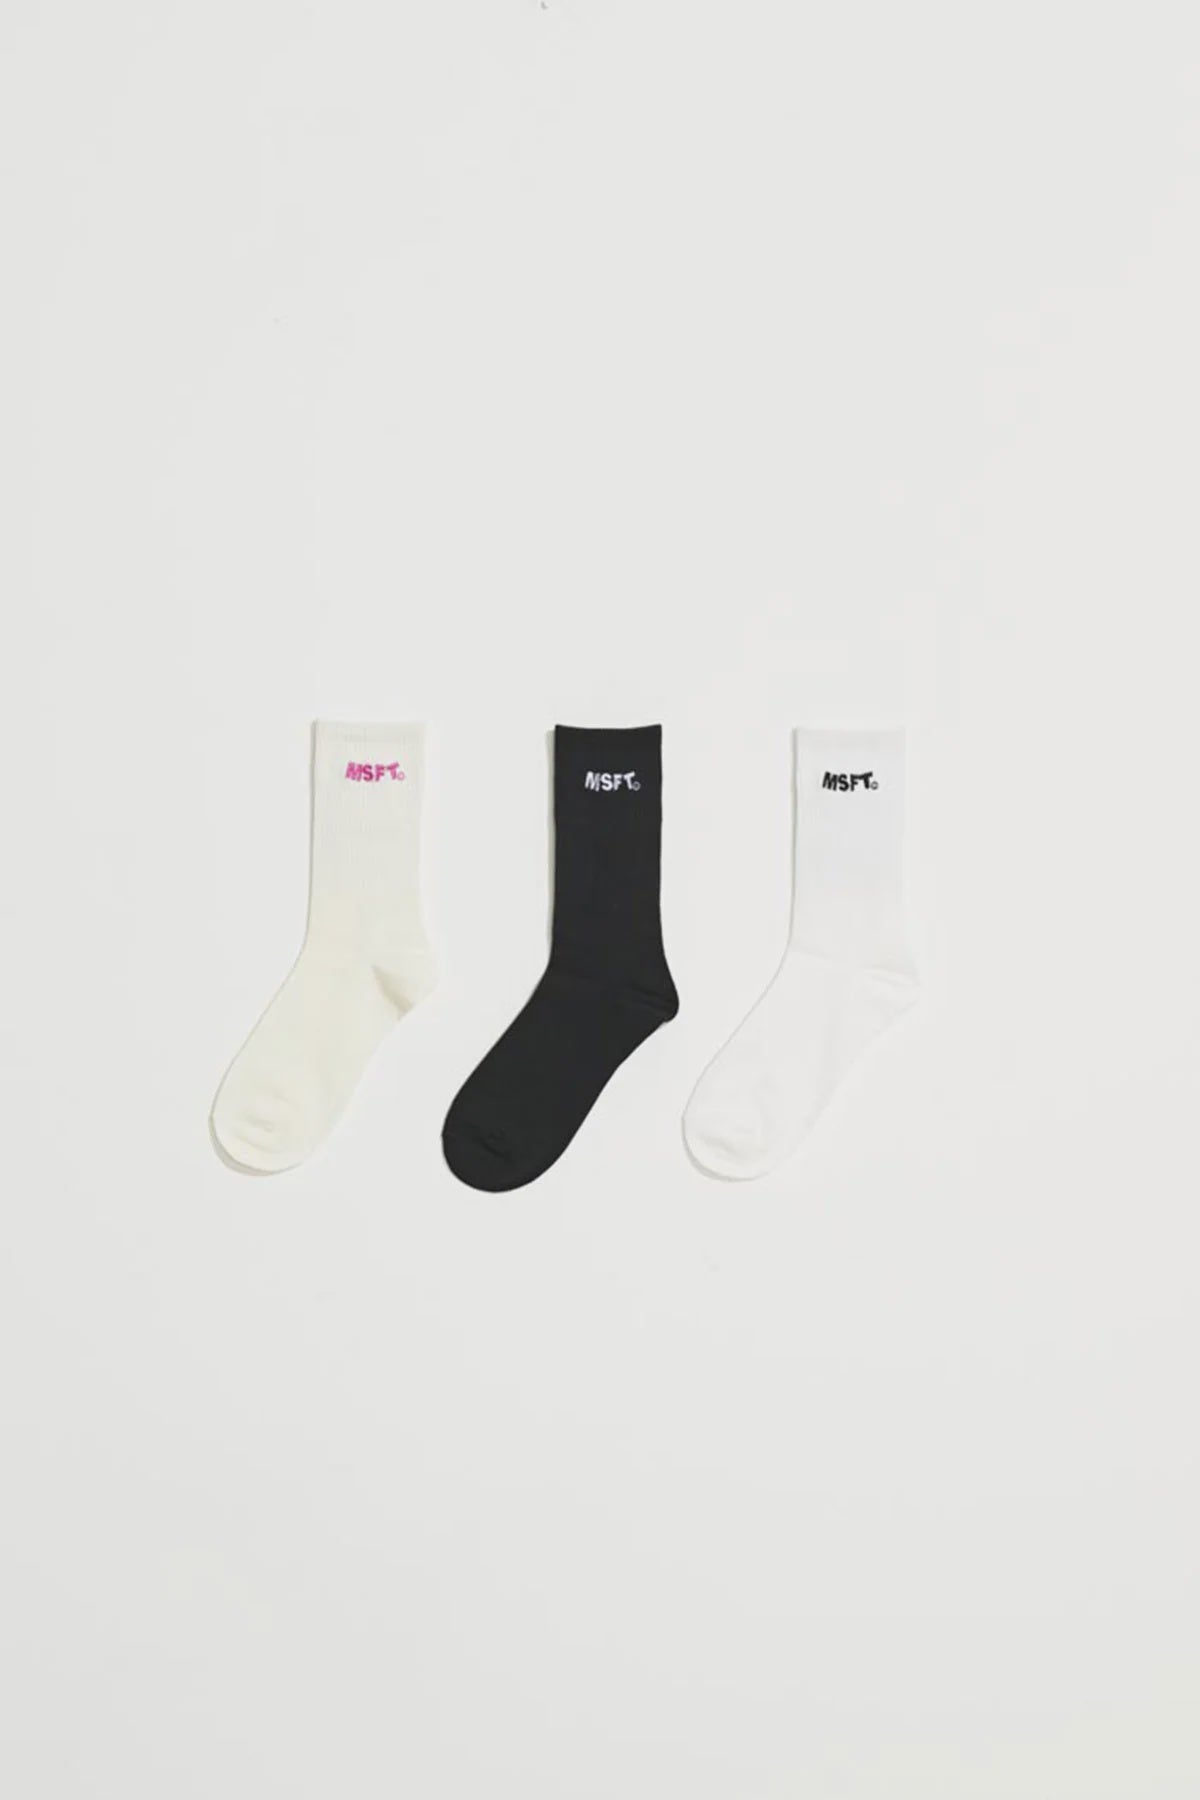 Misfit devod hemp wmns 3pk sock - multi coloured